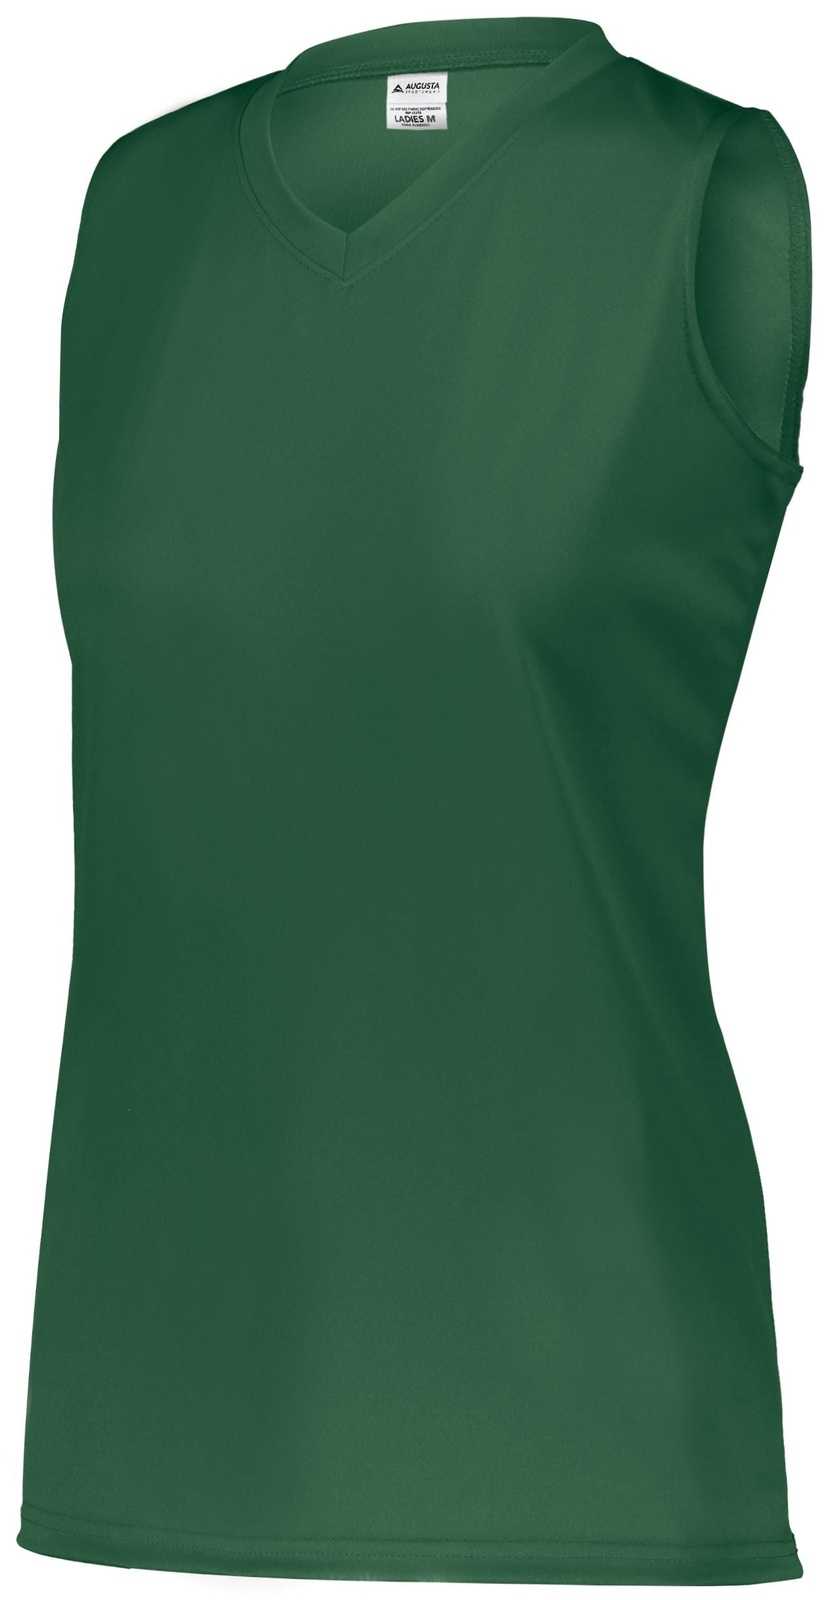 Augusta 4794 Ladies Attain Wicking Sleeveless Jersey - Dark Green - HIT a Double